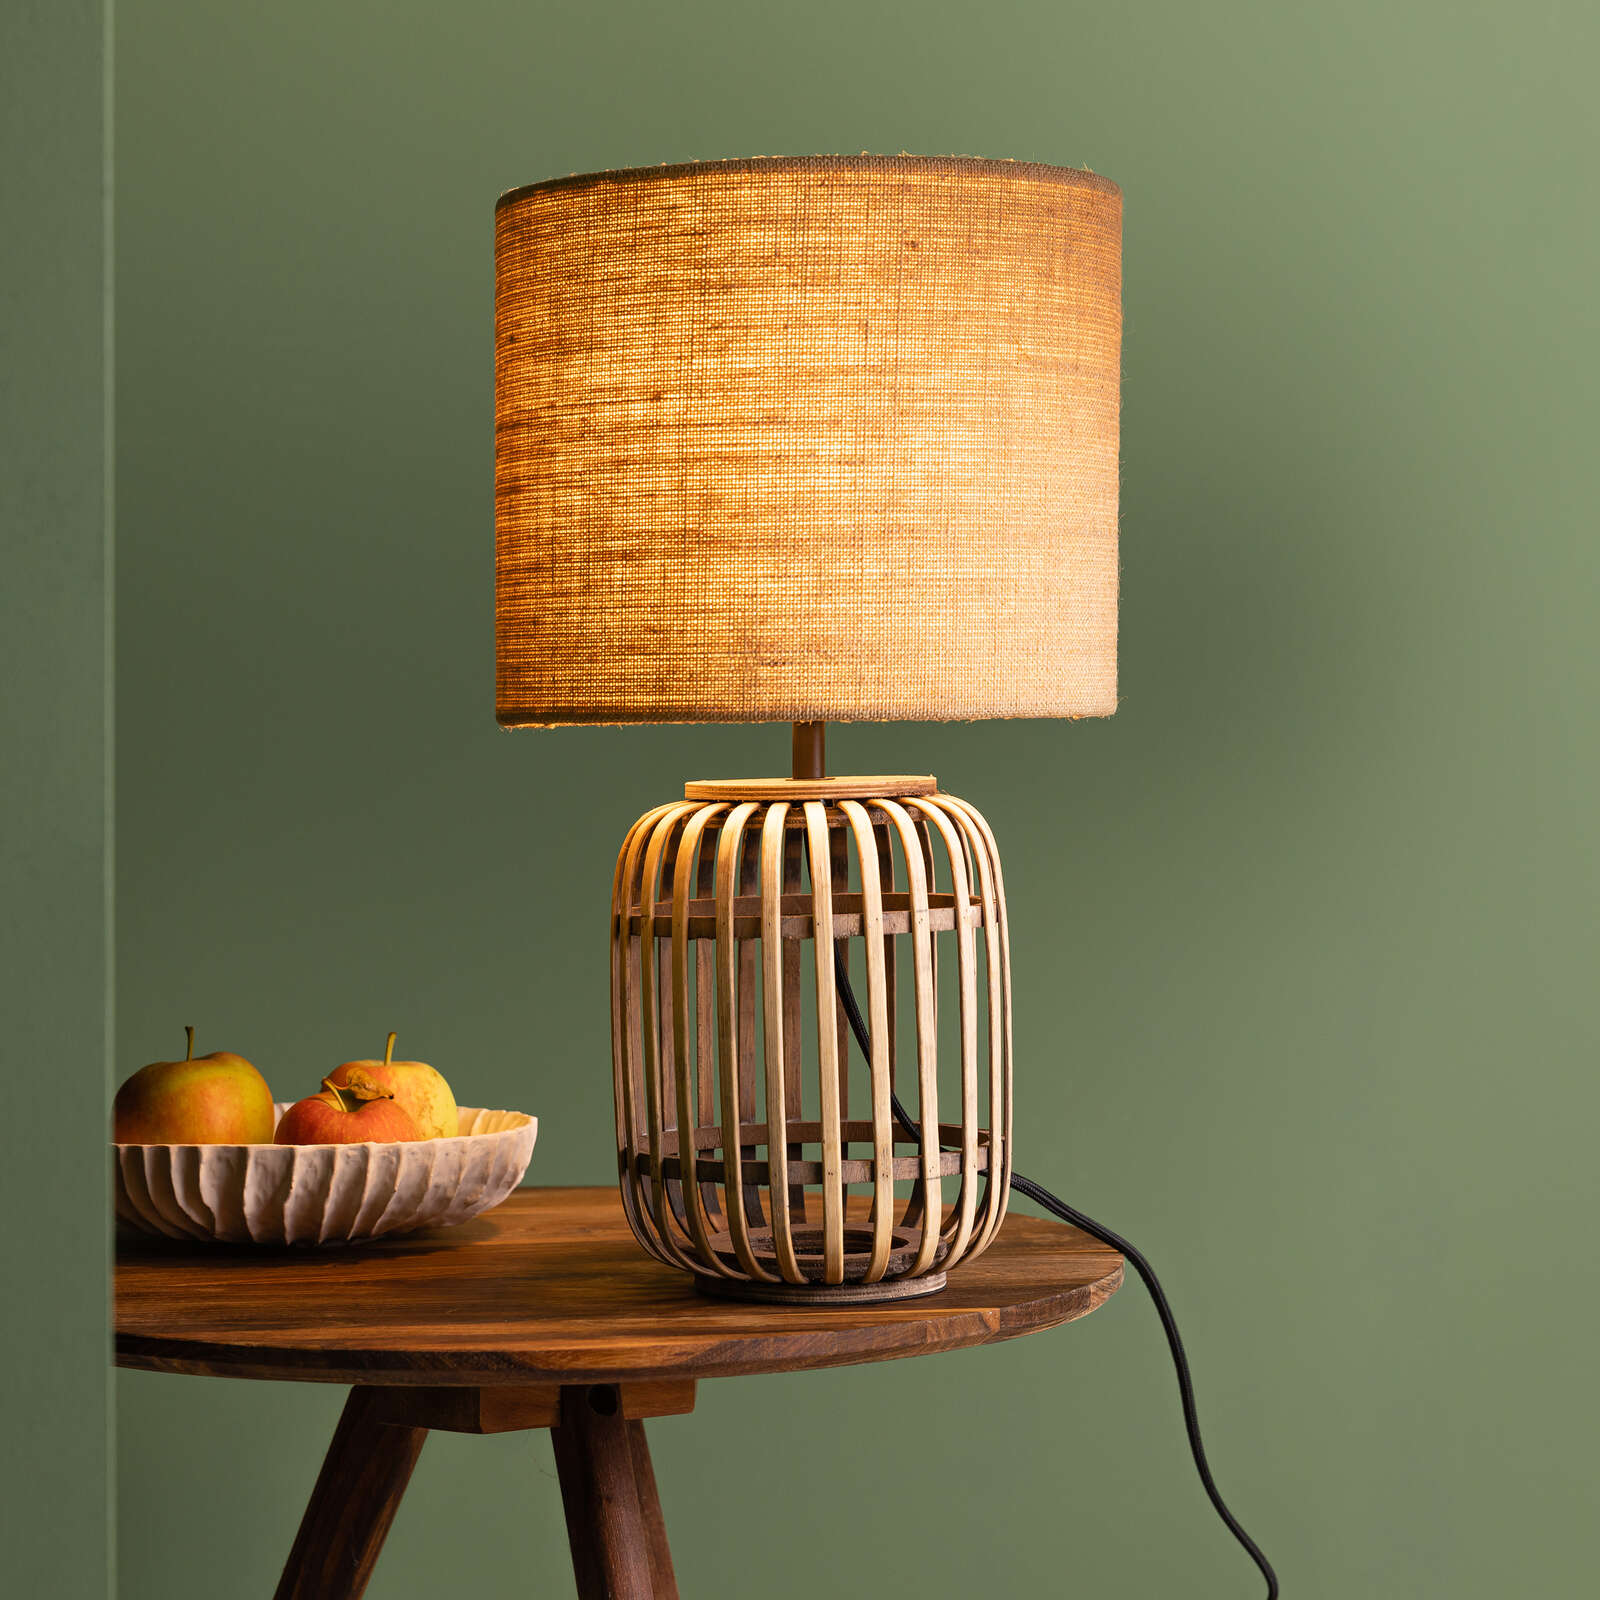             Lampe de table en bambou - Willi 1 - Marron
        